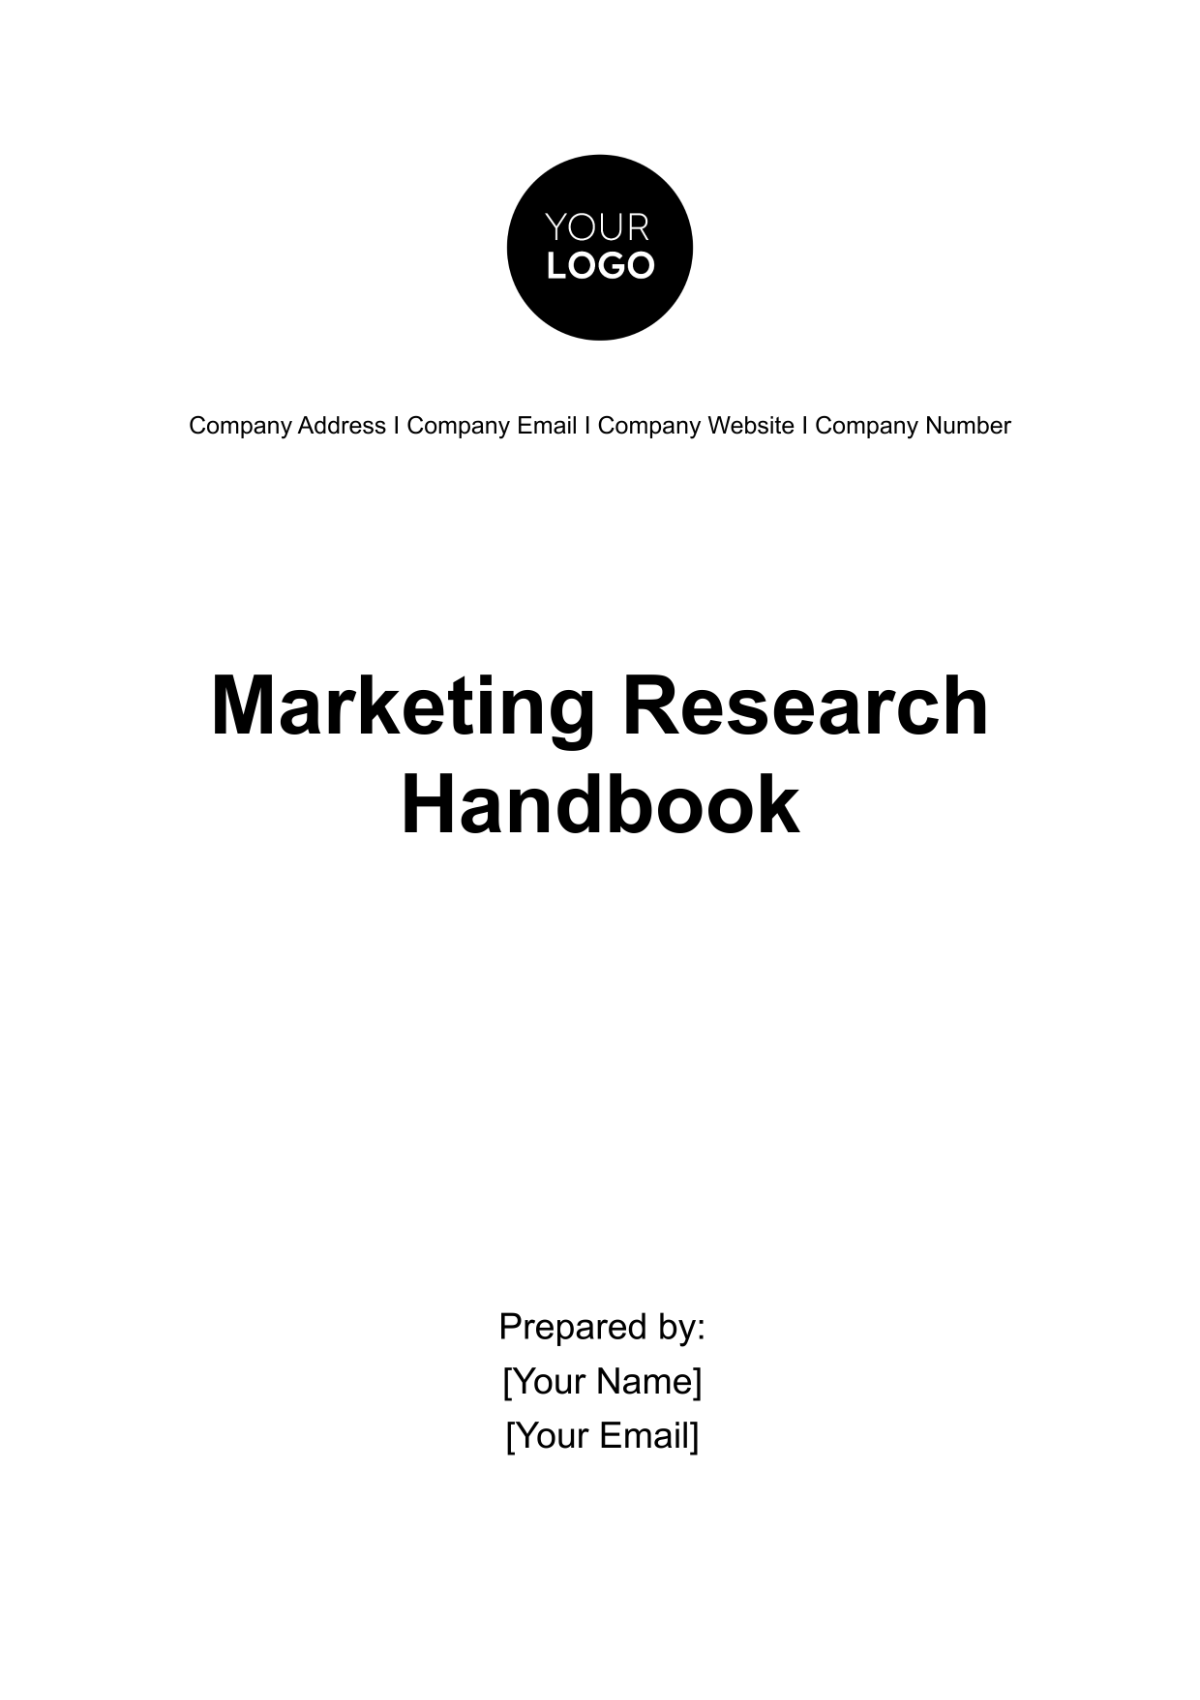 Free Marketing Research Handbook Template